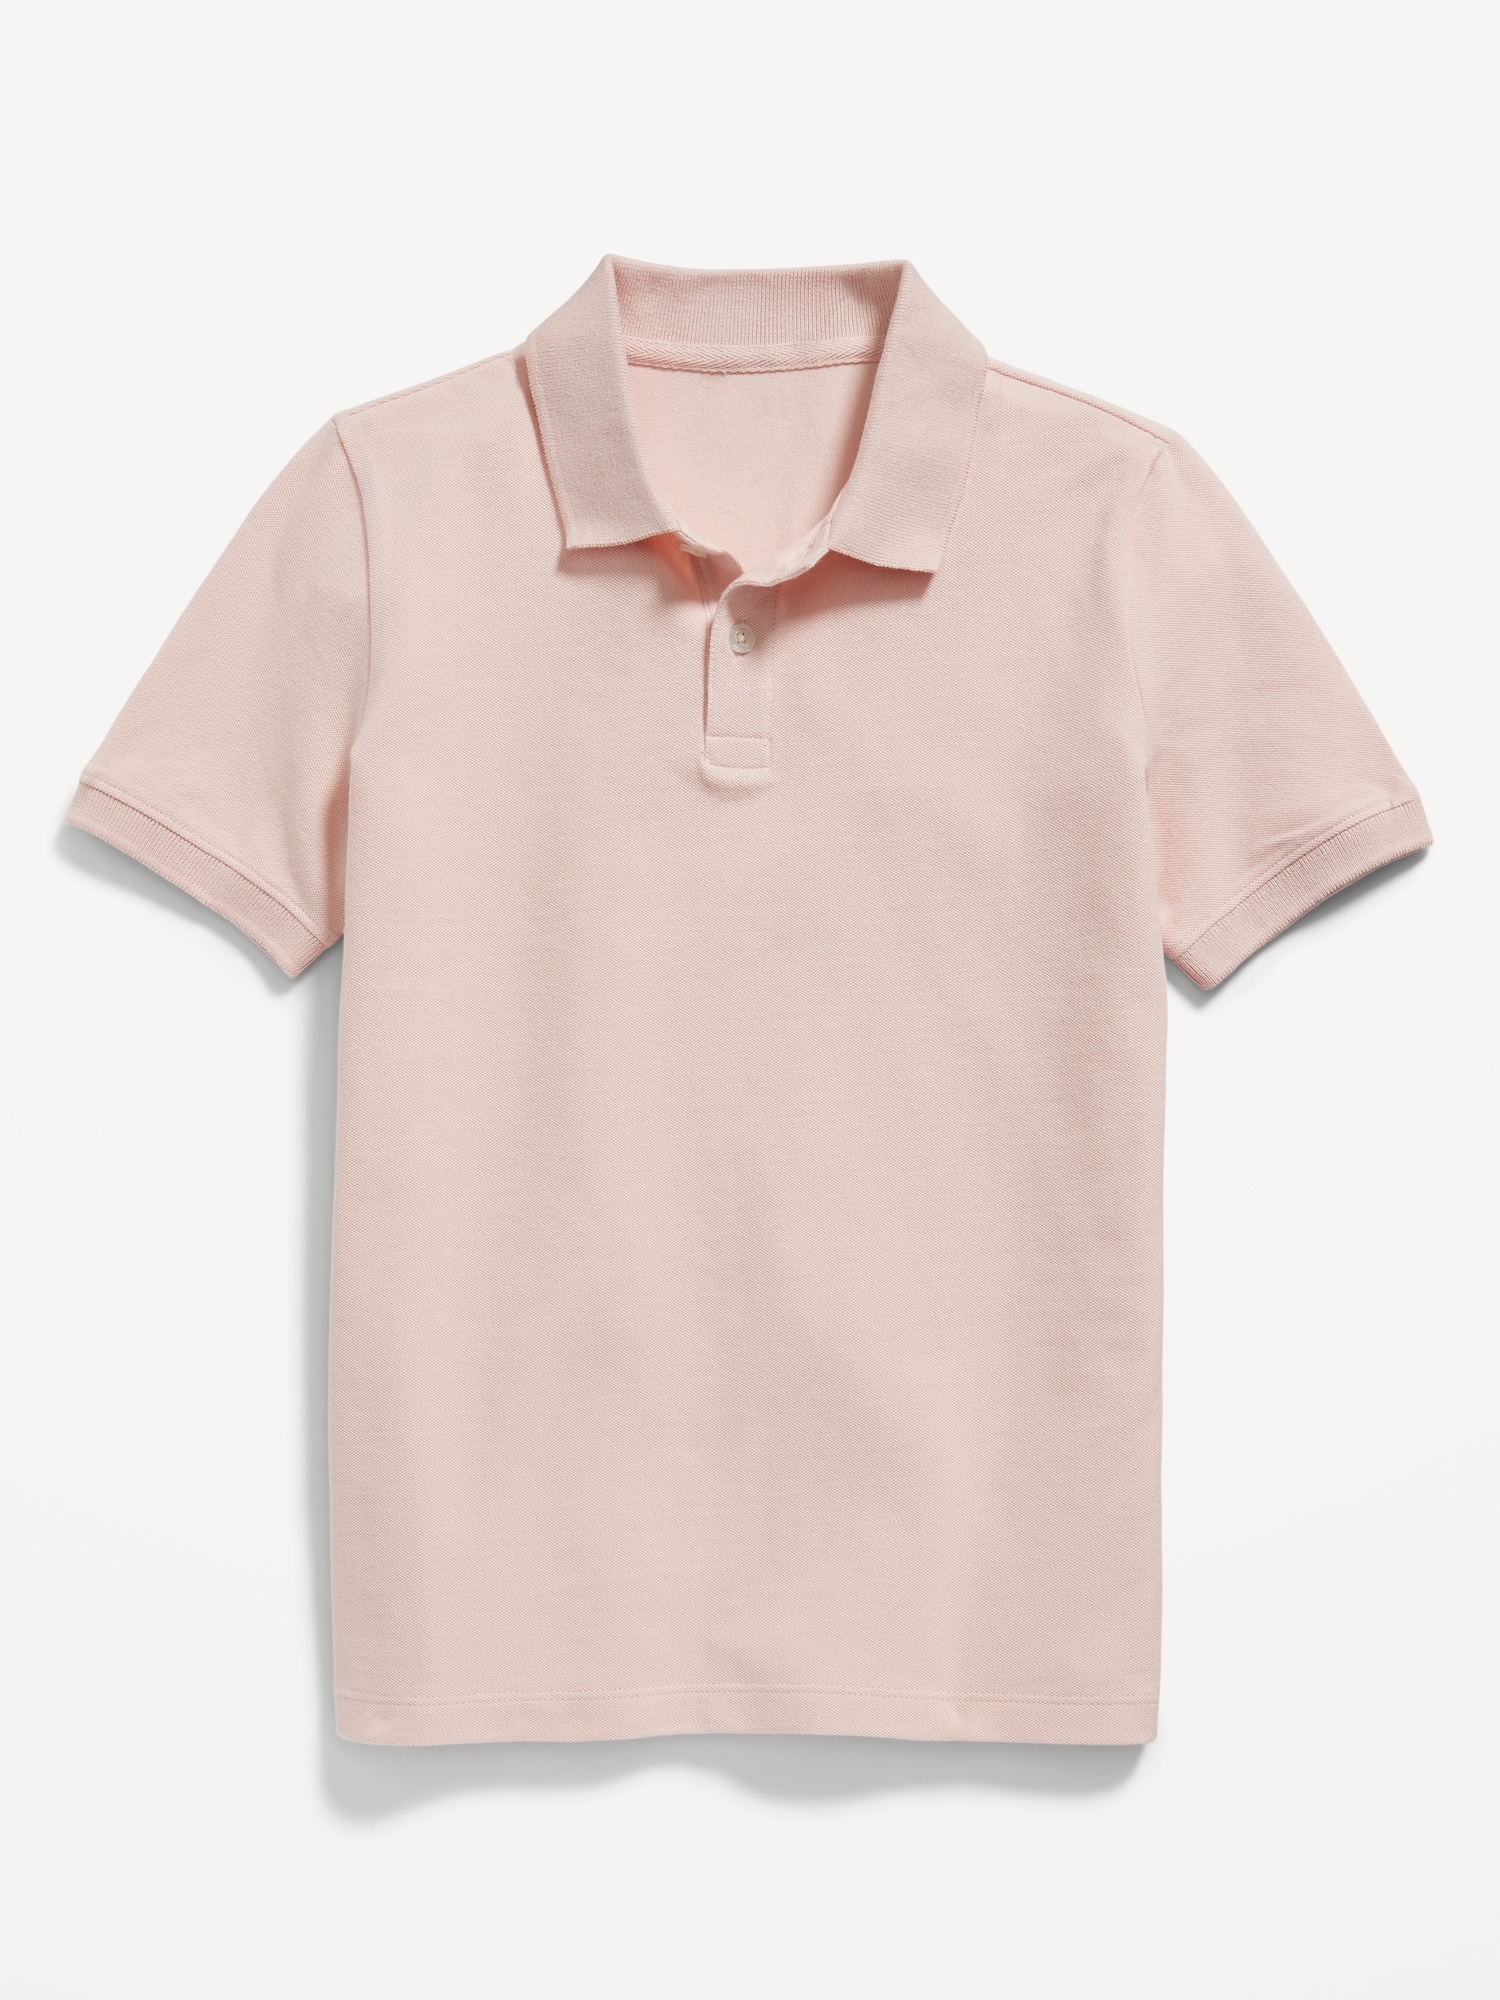 Old Navy School Uniform Pique Polo Shirt for Boys pink. 1